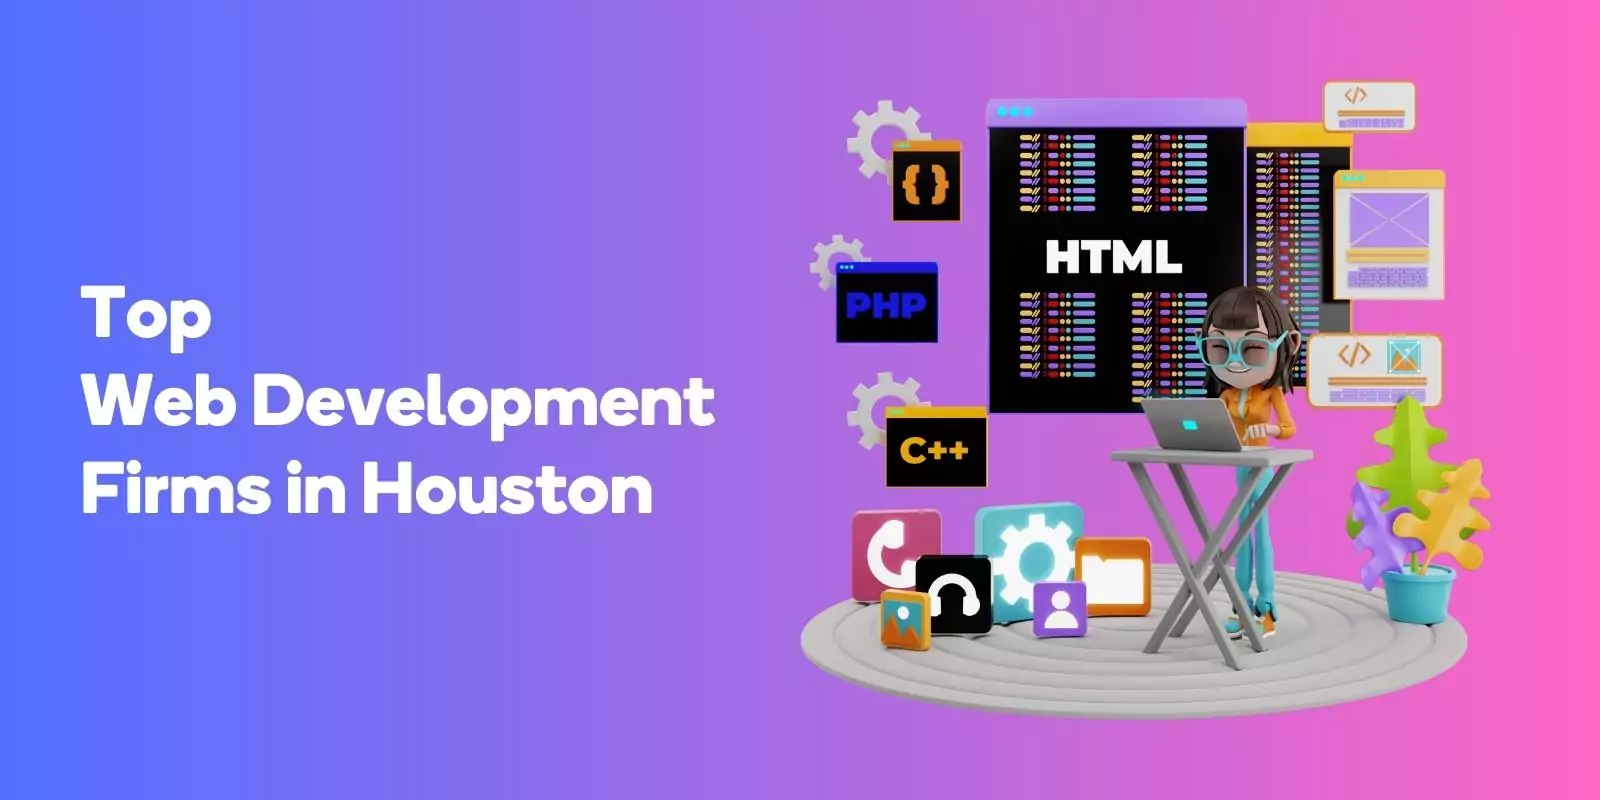 Top Web Development Firms in Houston